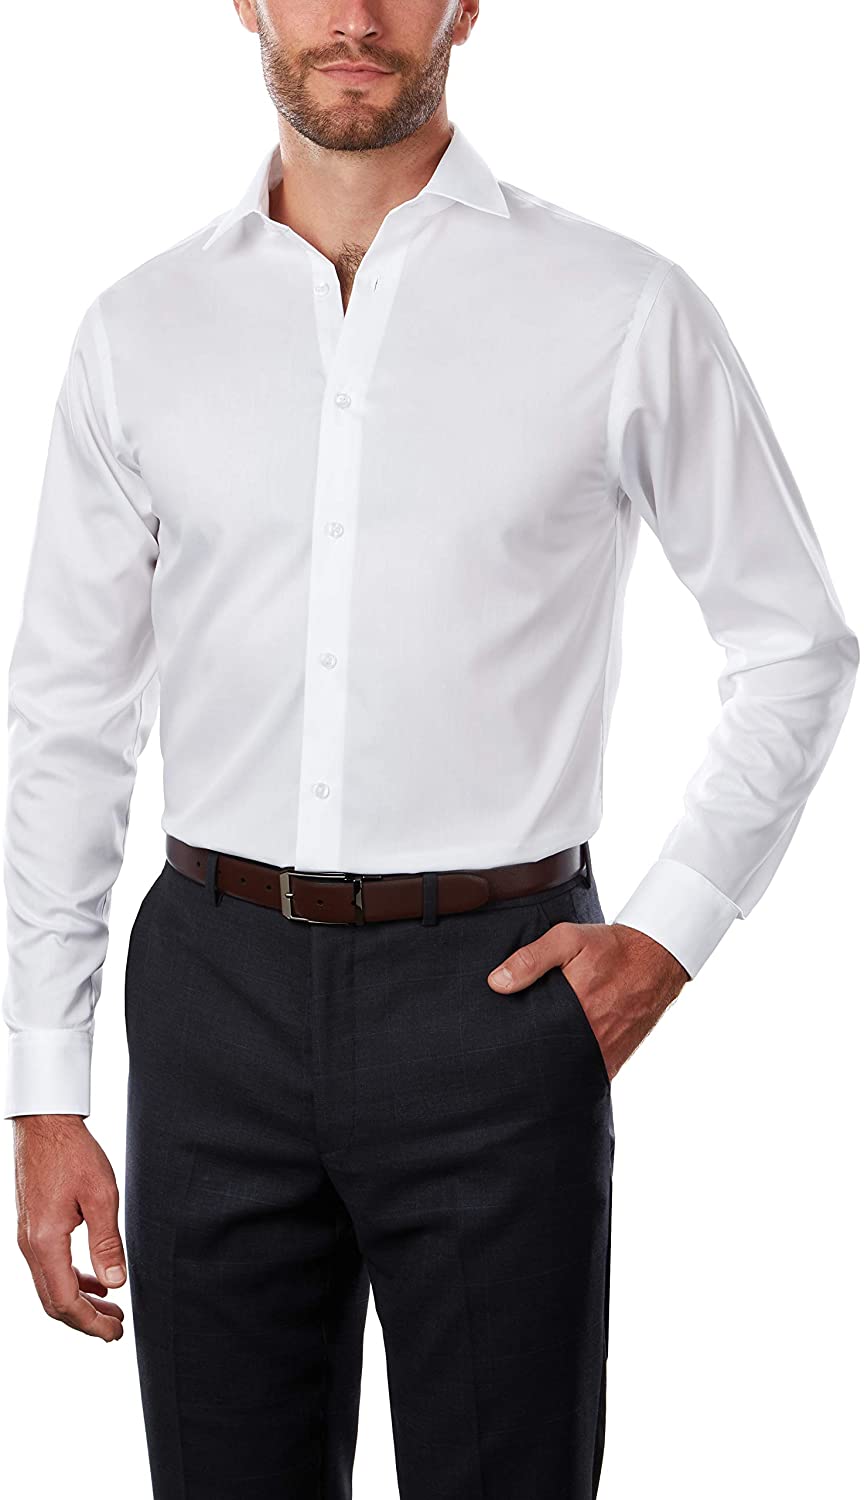 Calvin Klein Men's Dress Shirt Regular Fit Non Iron, White, Size 15.0